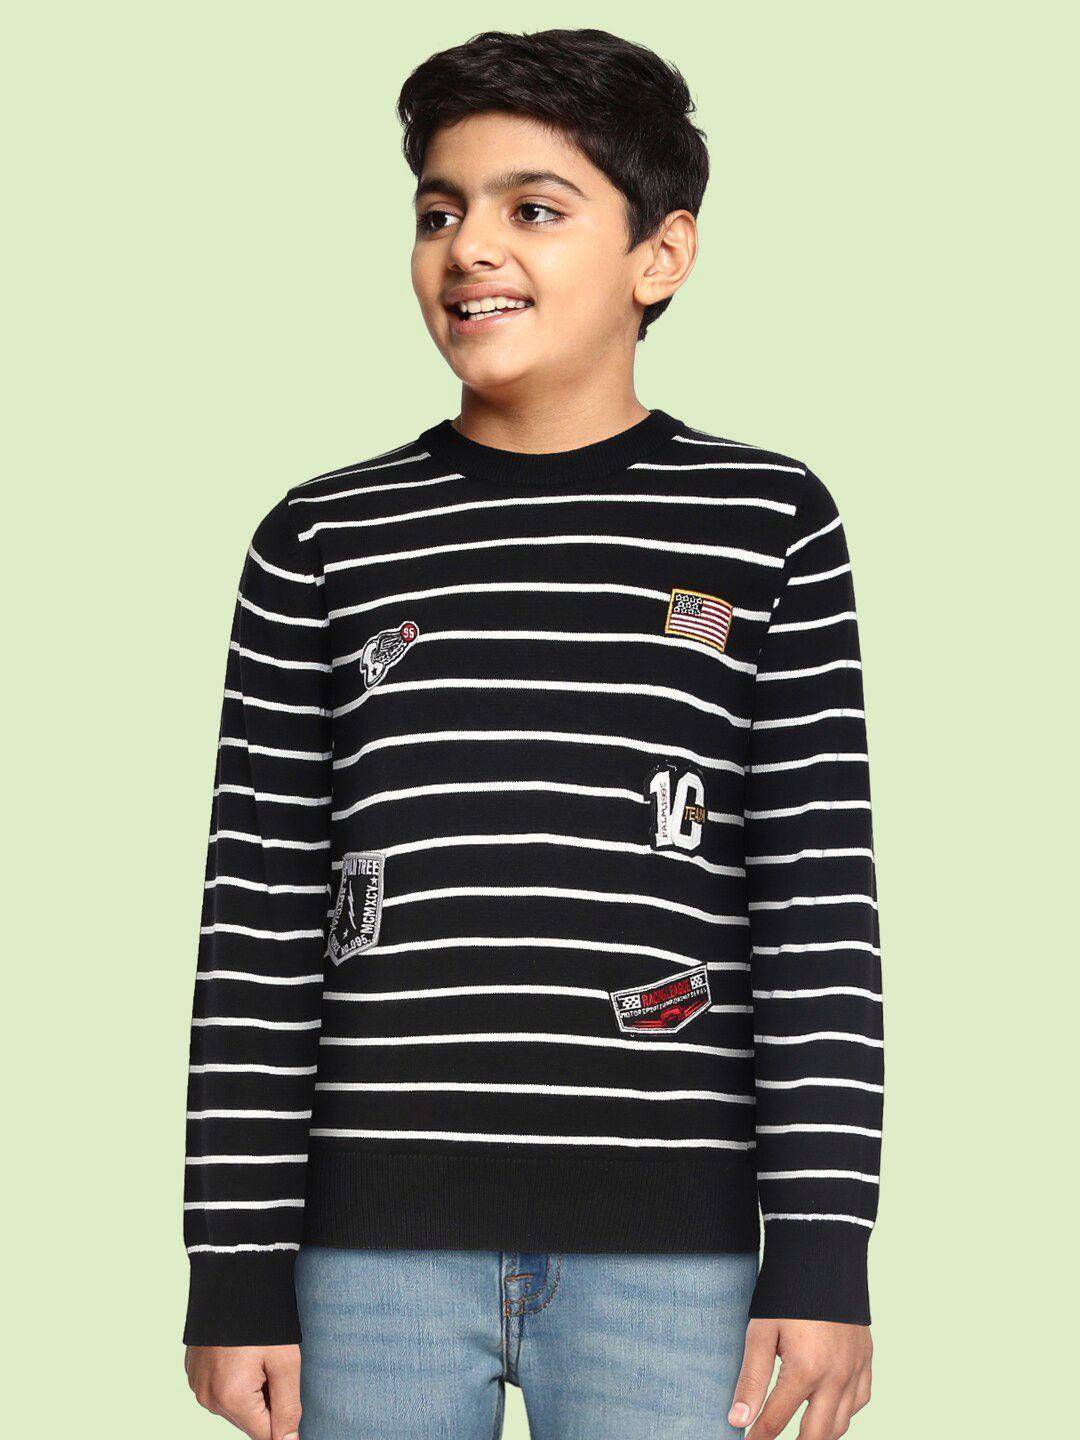 palm-tree-boys-black-&-white-striped-pullover-sweater